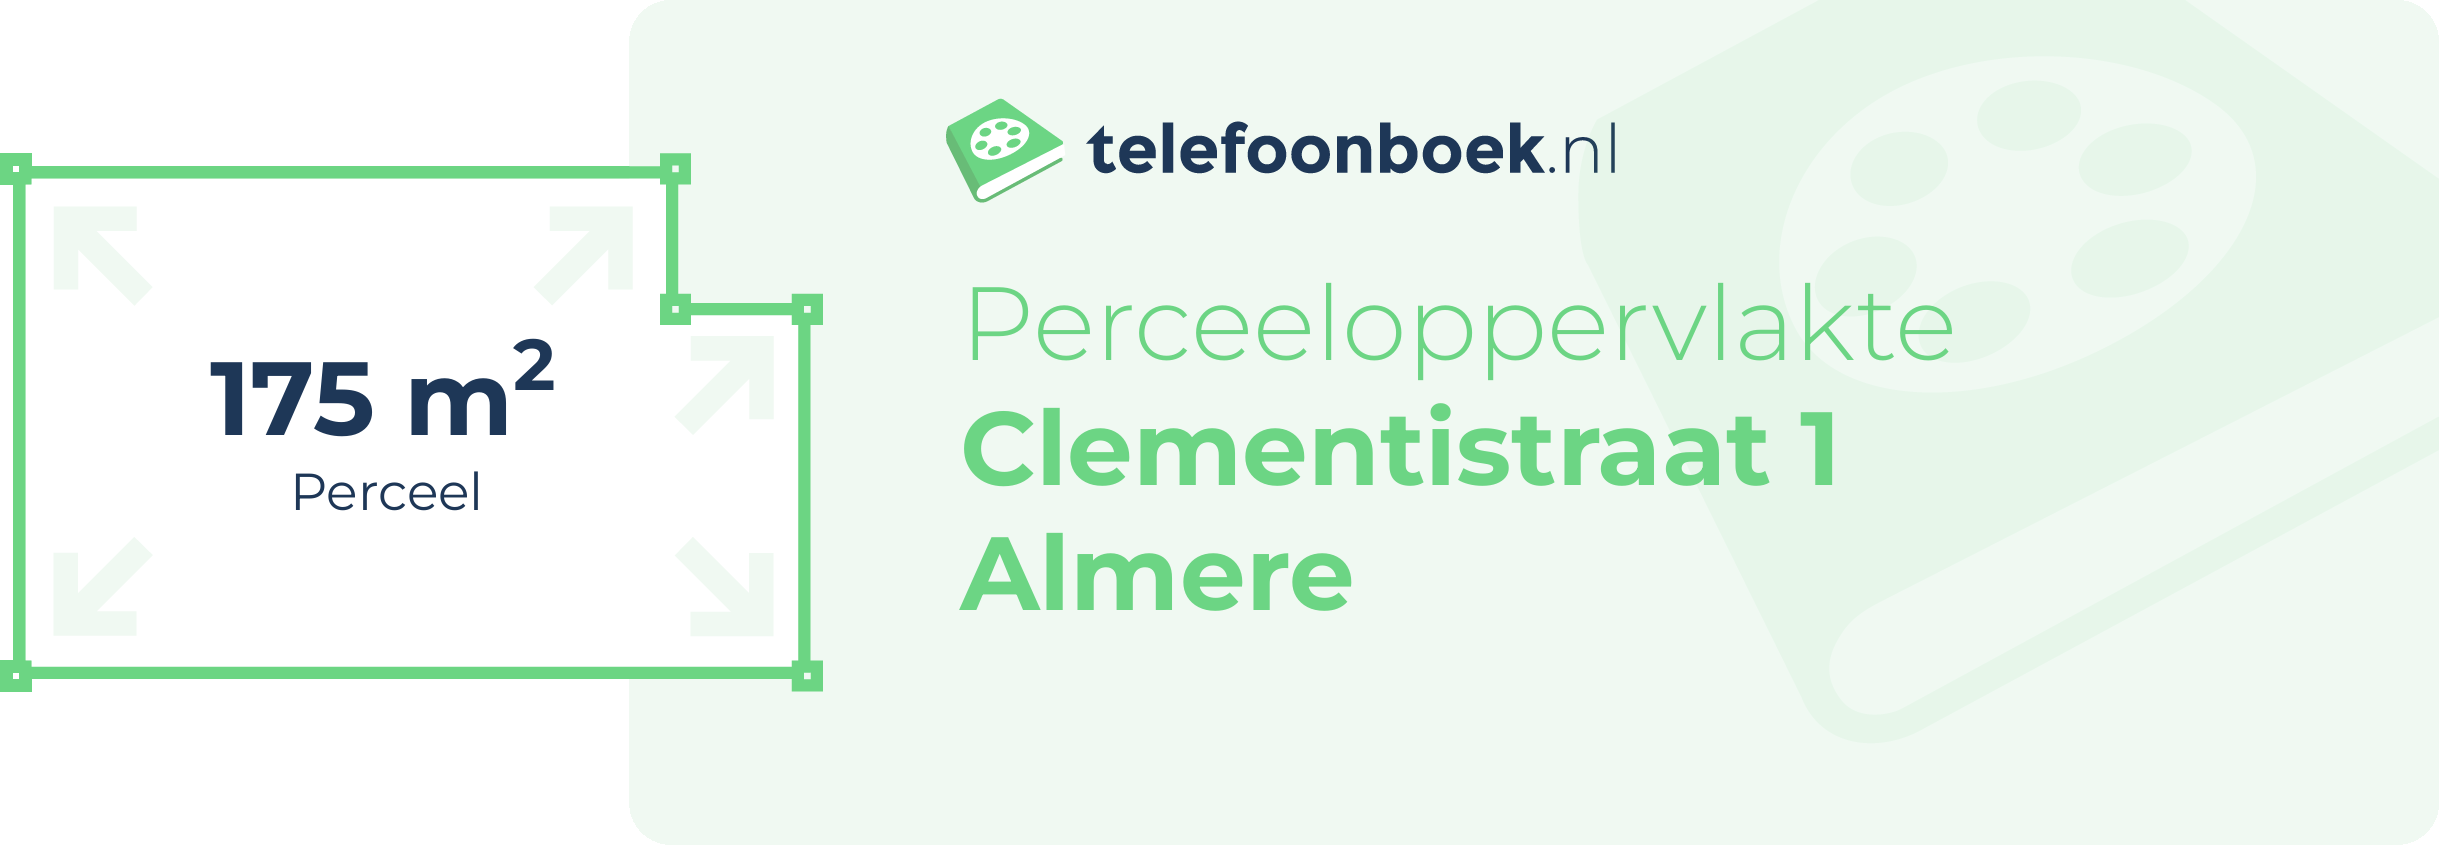 Perceeloppervlakte Clementistraat 1 Almere